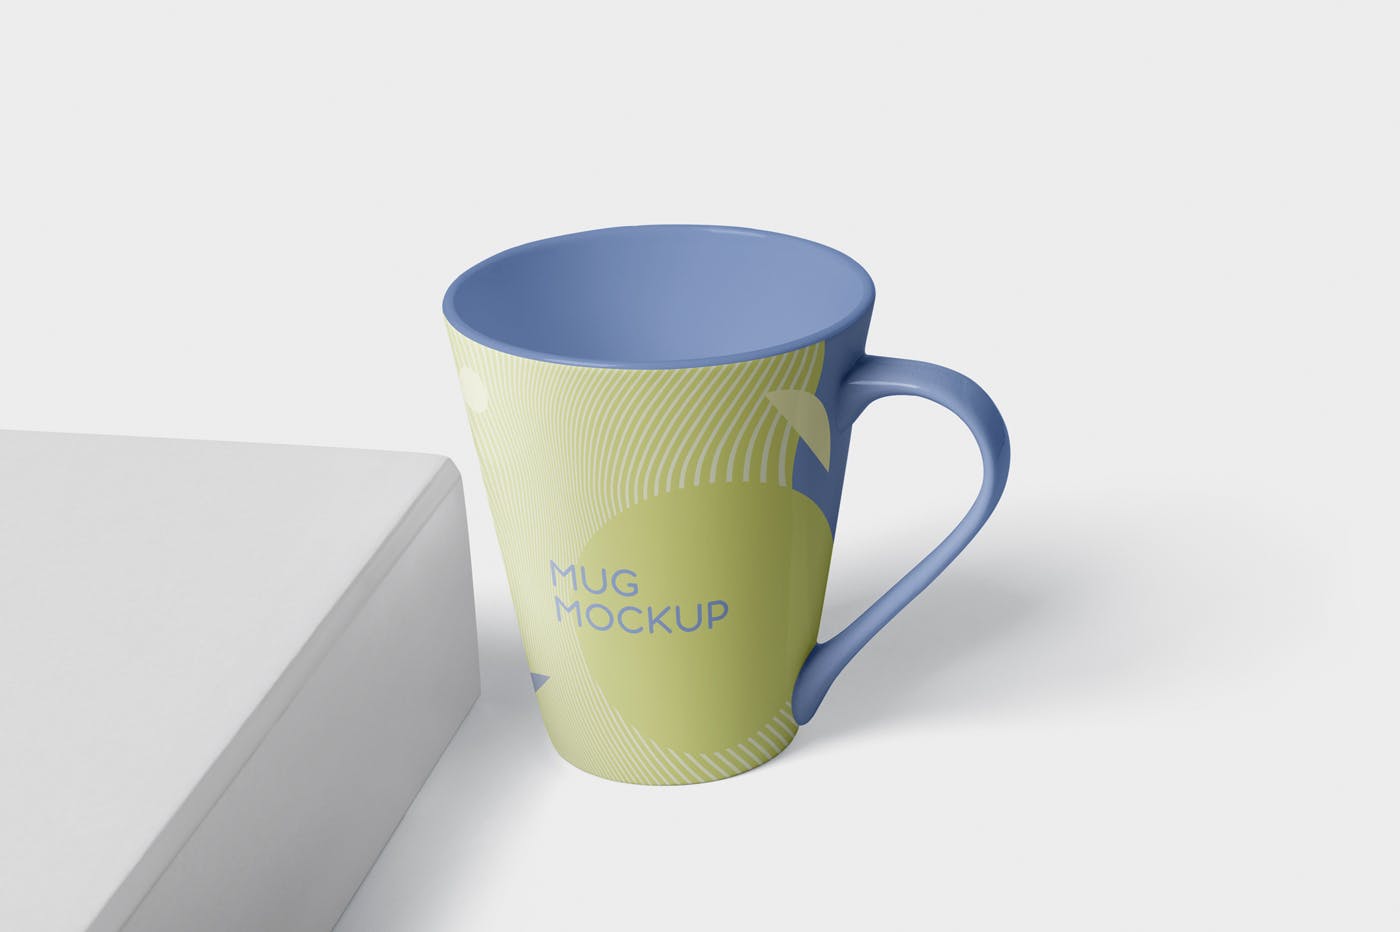 锥形马克杯图案设计16设计网精选 Mug Mockup – Cone Shaped插图(3)